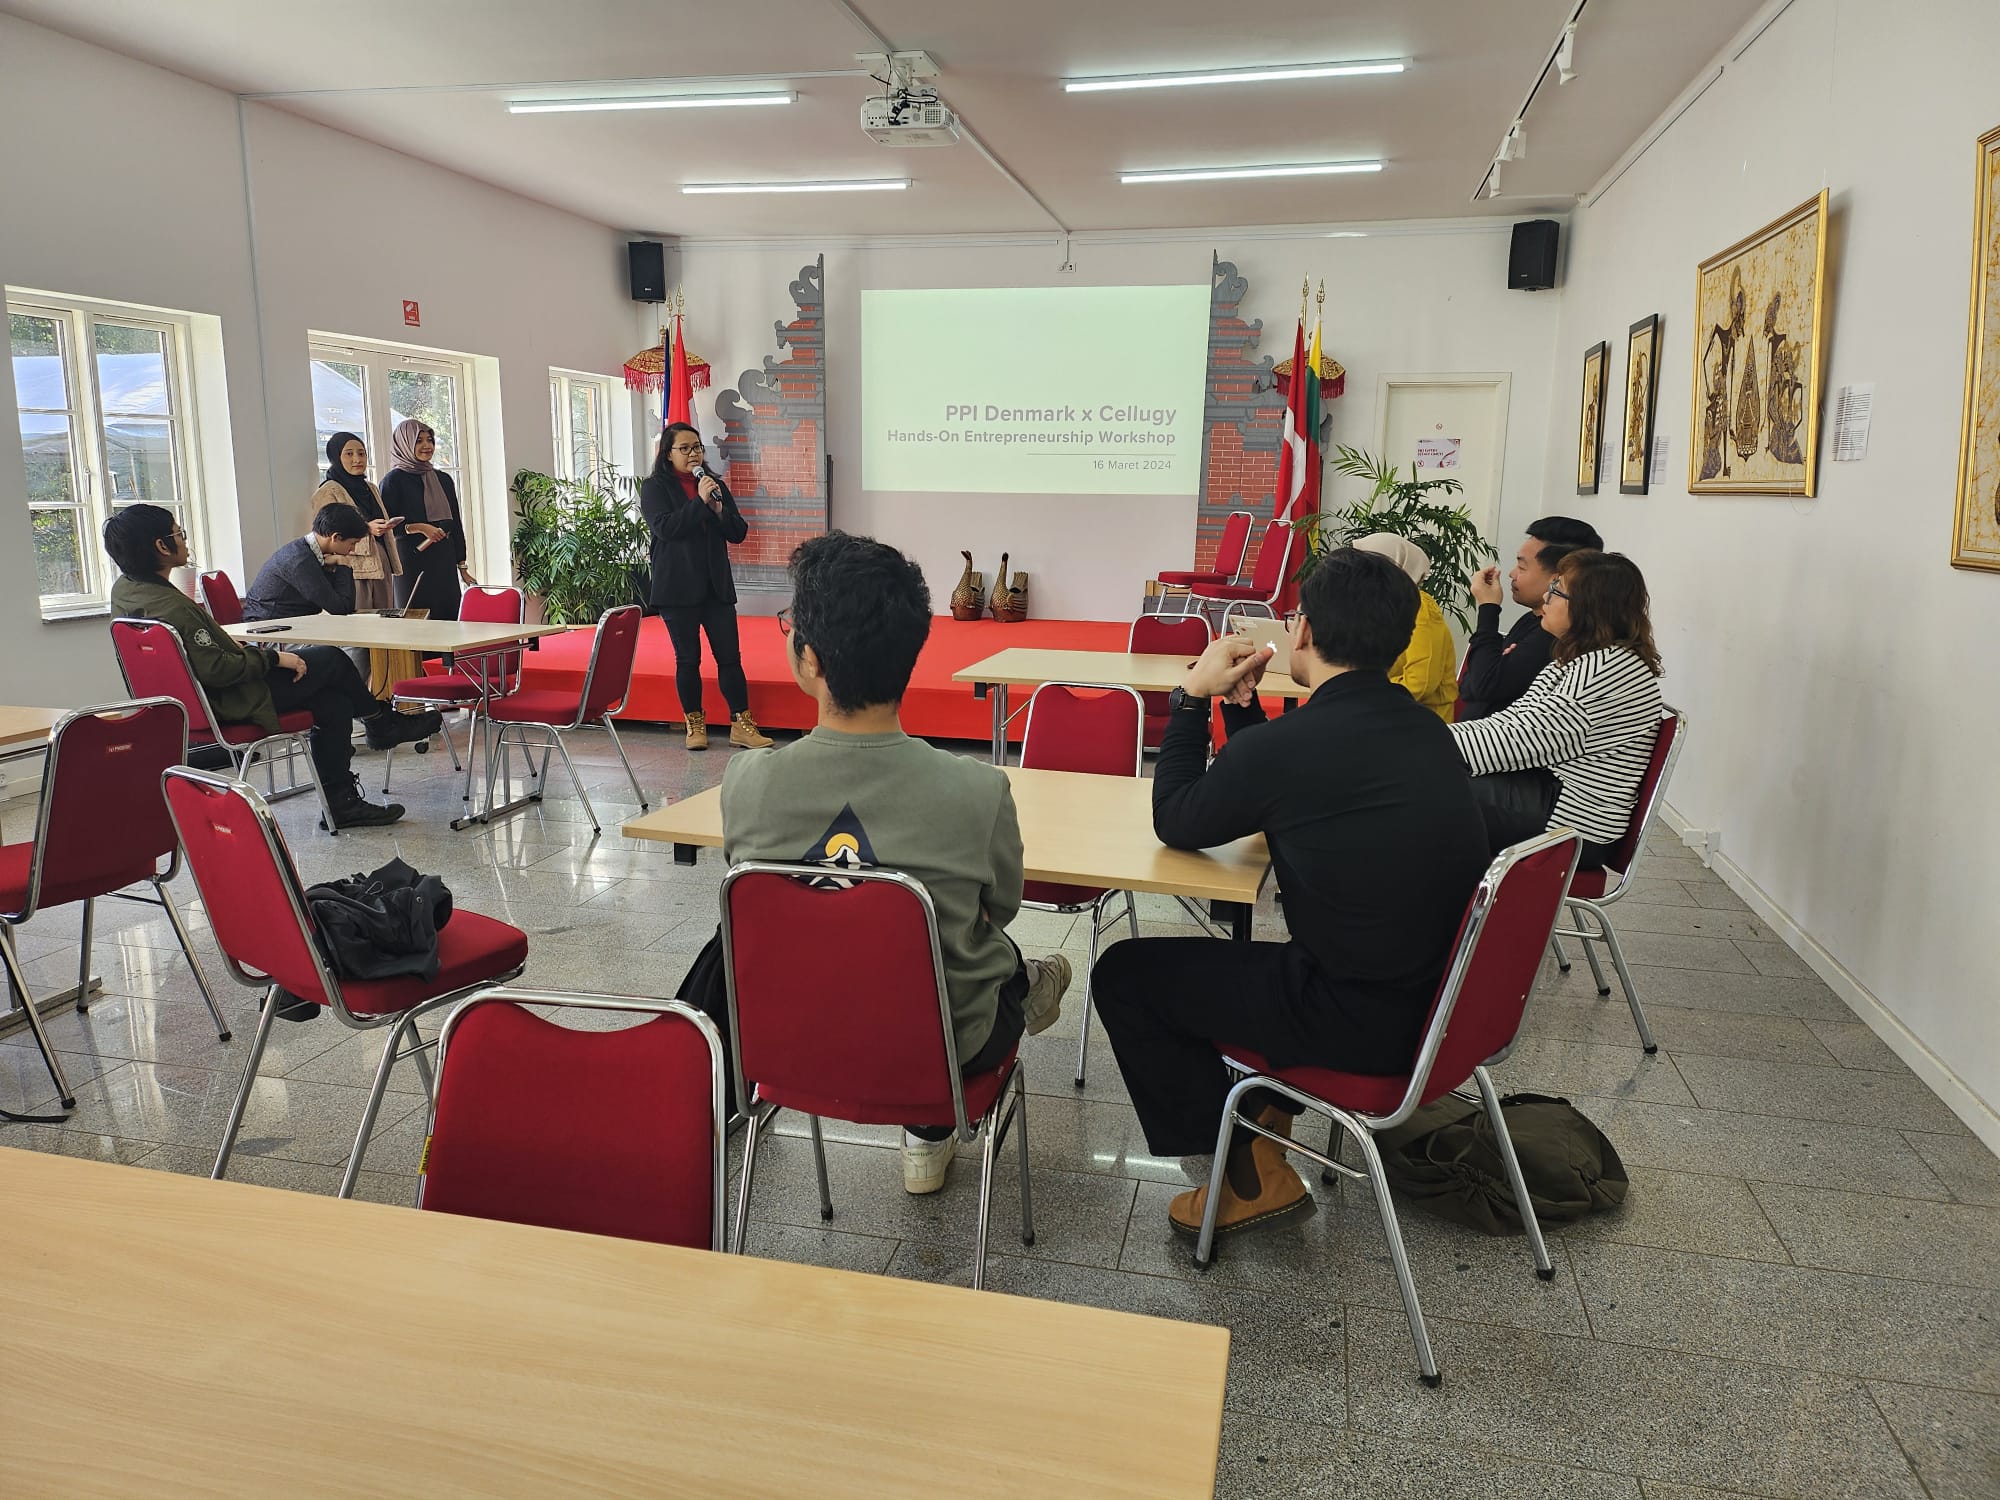 The embassy hosted the Hands on Entrepreneurship Workshop